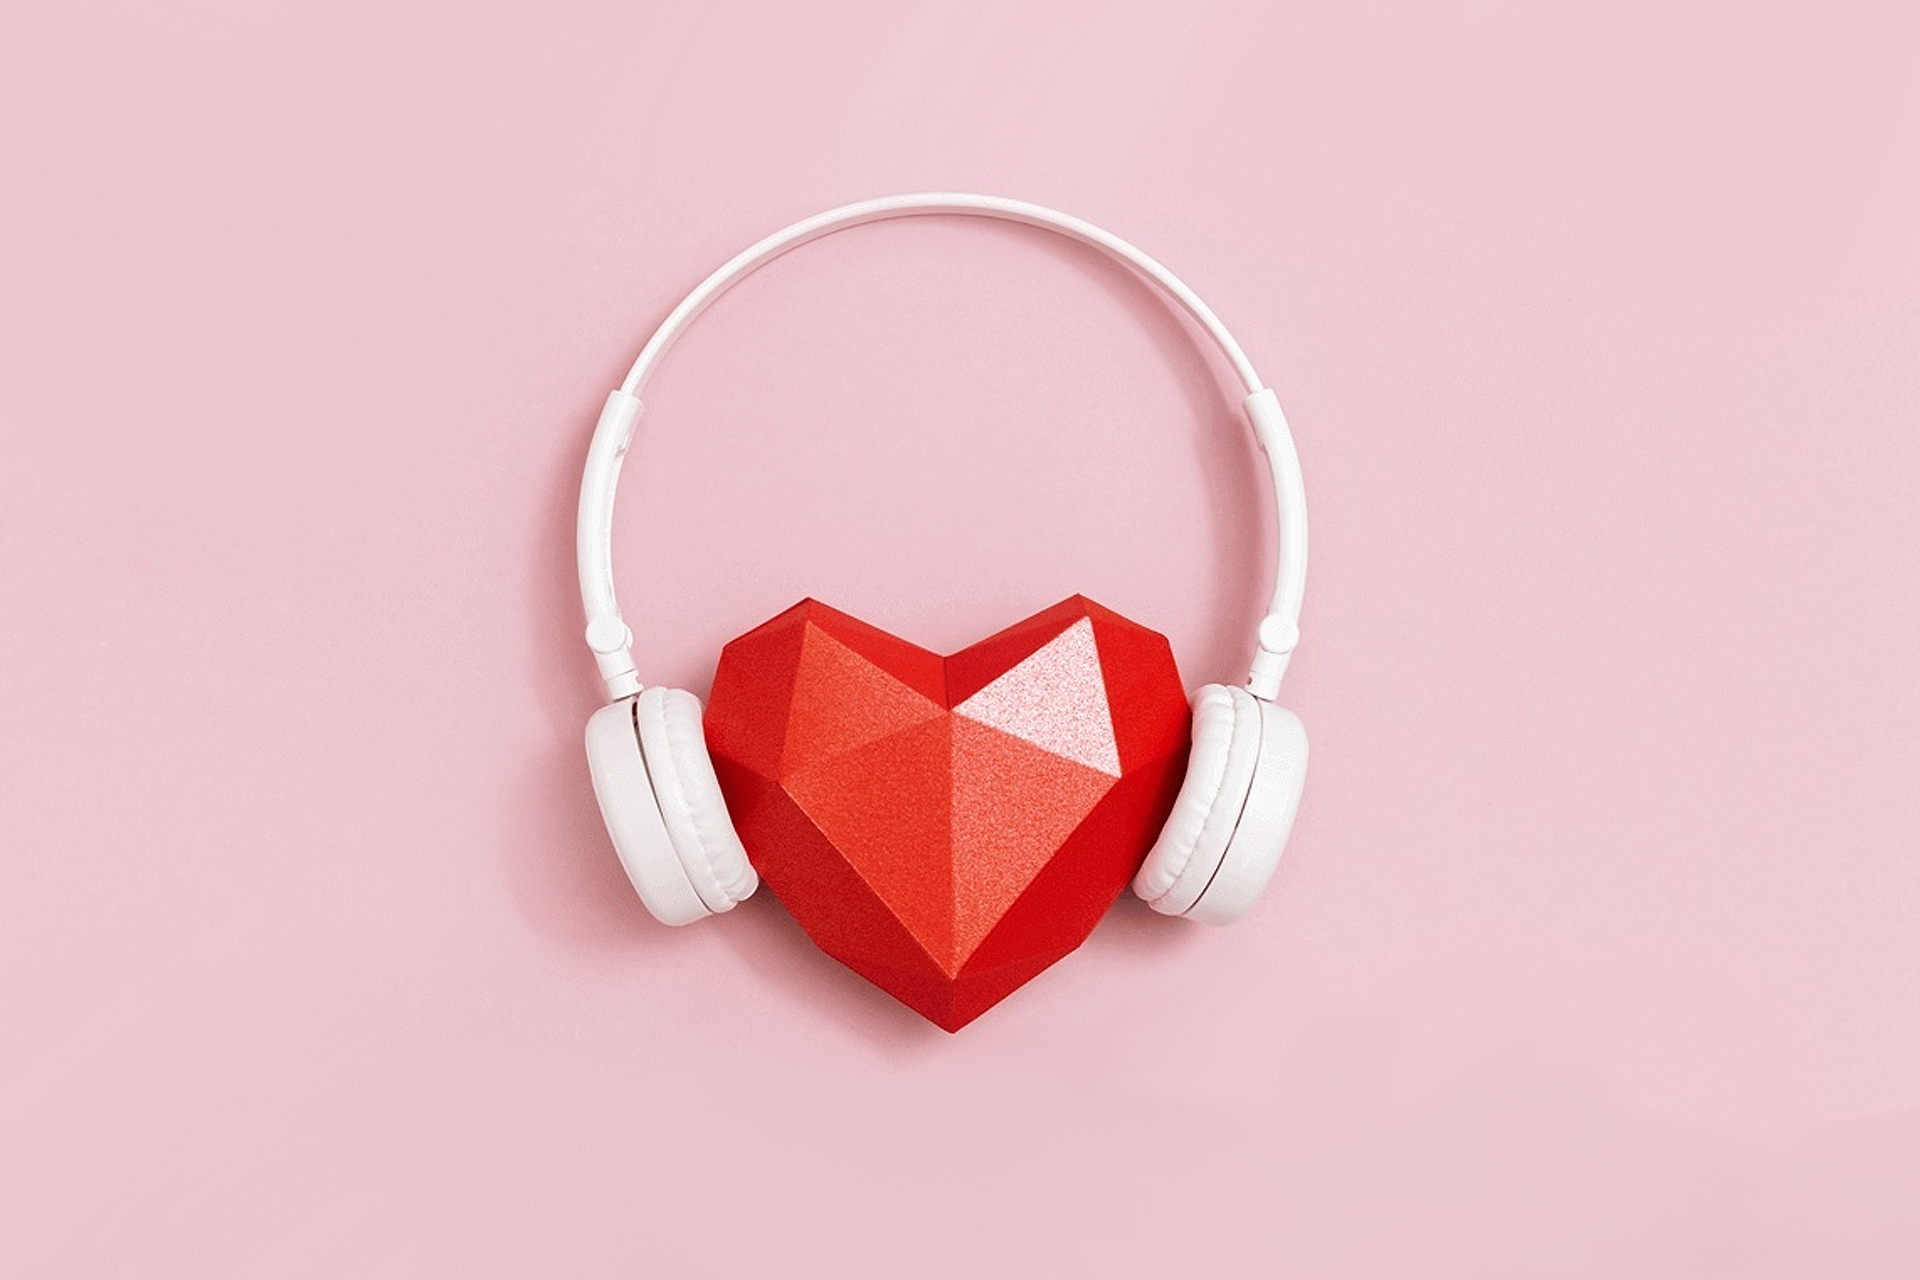 A heart wearing headphones